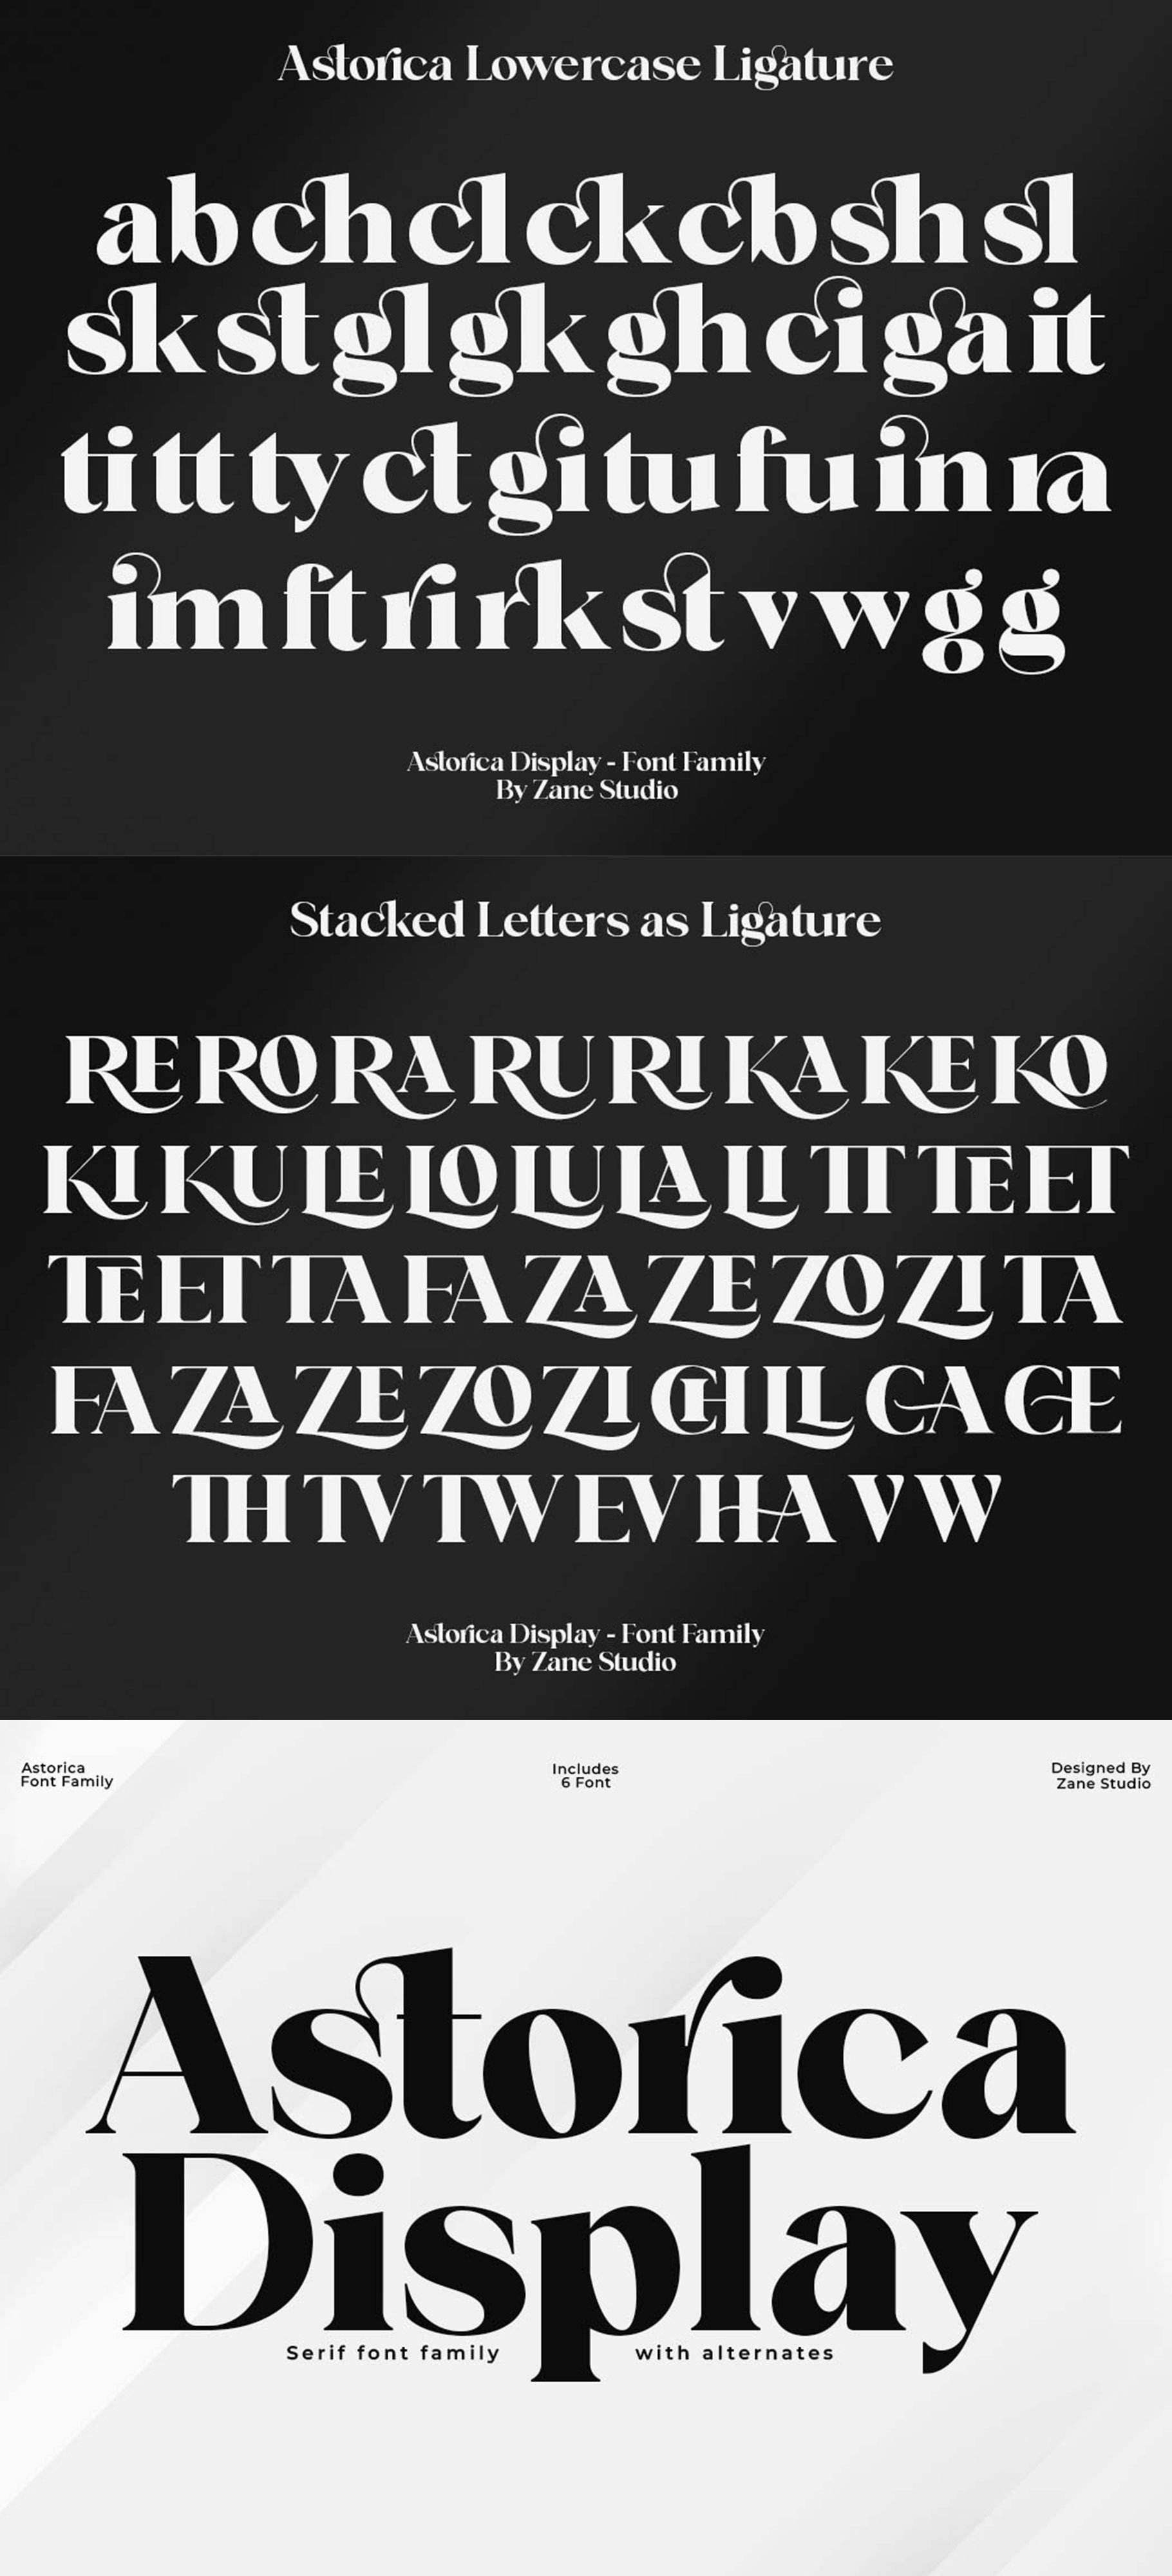 Astorica Display - Font Family - Design Cuts